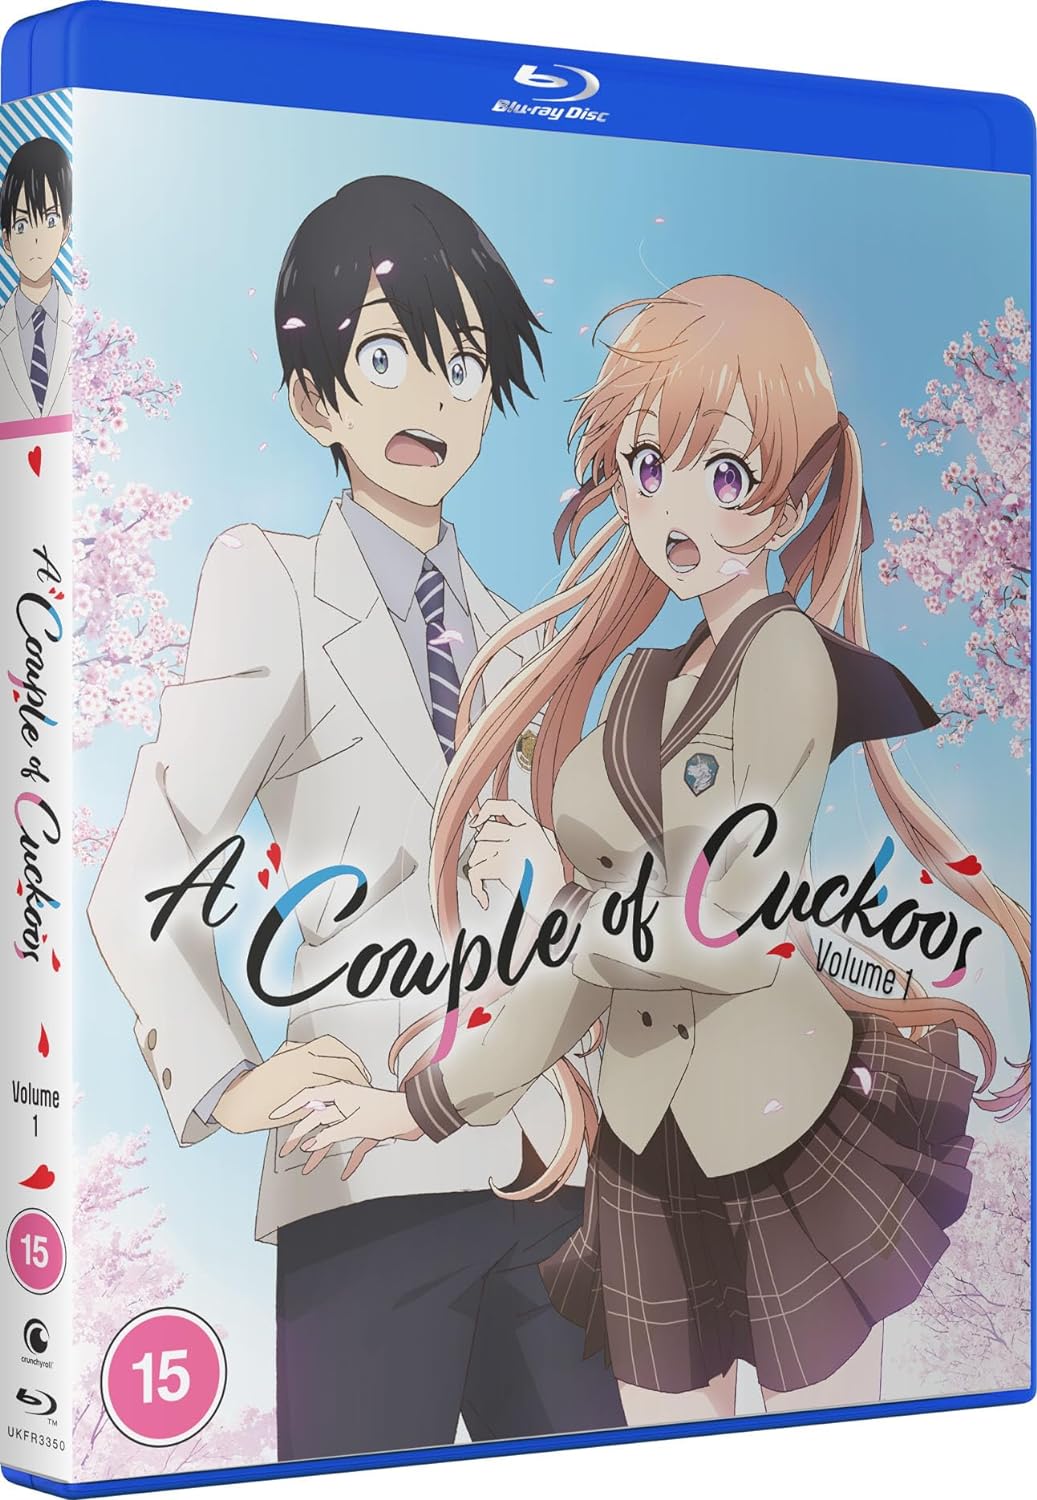 A couple of cuckoos - anime minimal poster | Anime, Comedy anime, Miki